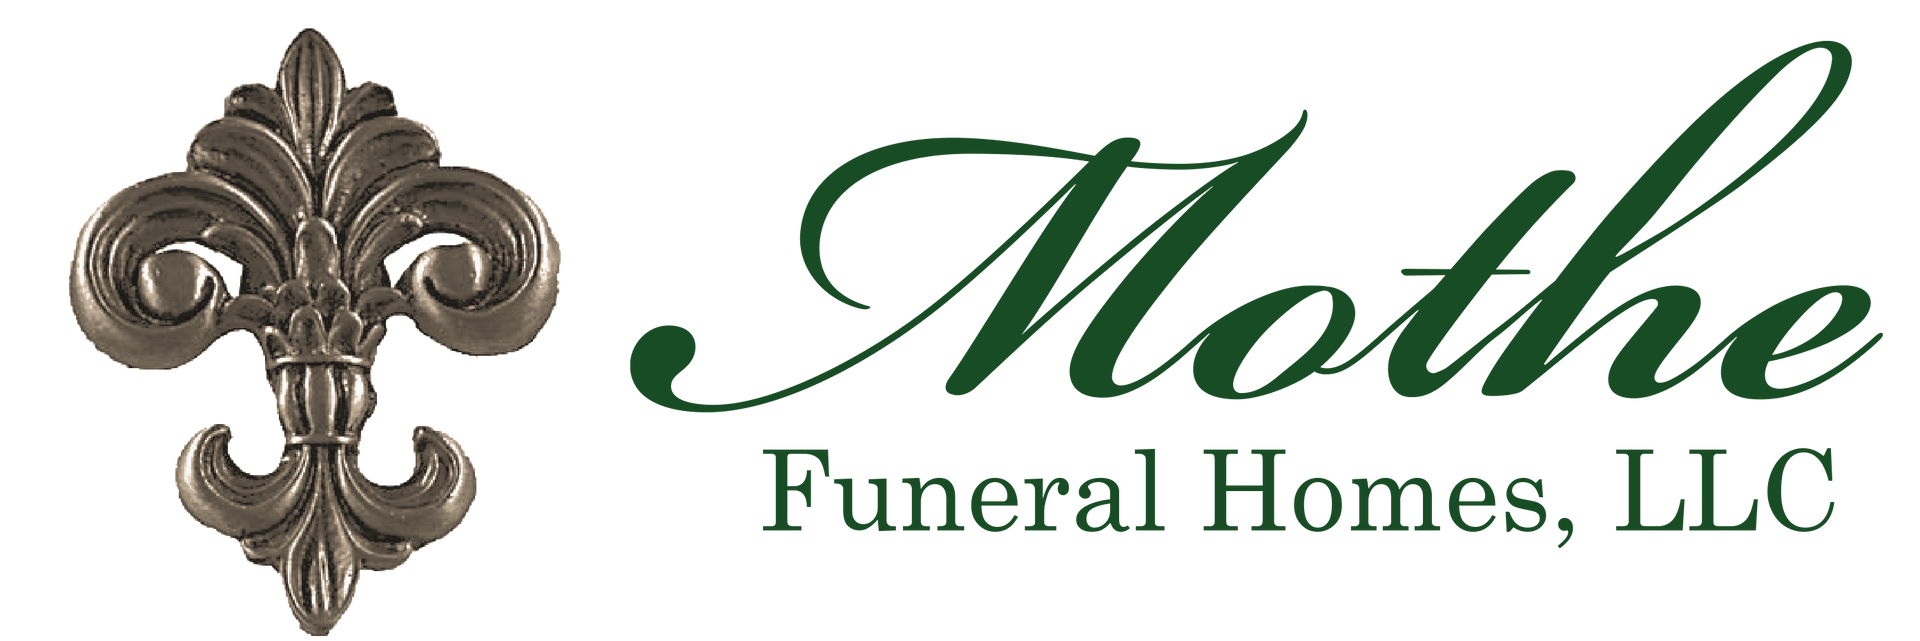 Mothe Funeral Homes LLC Logo Image 01